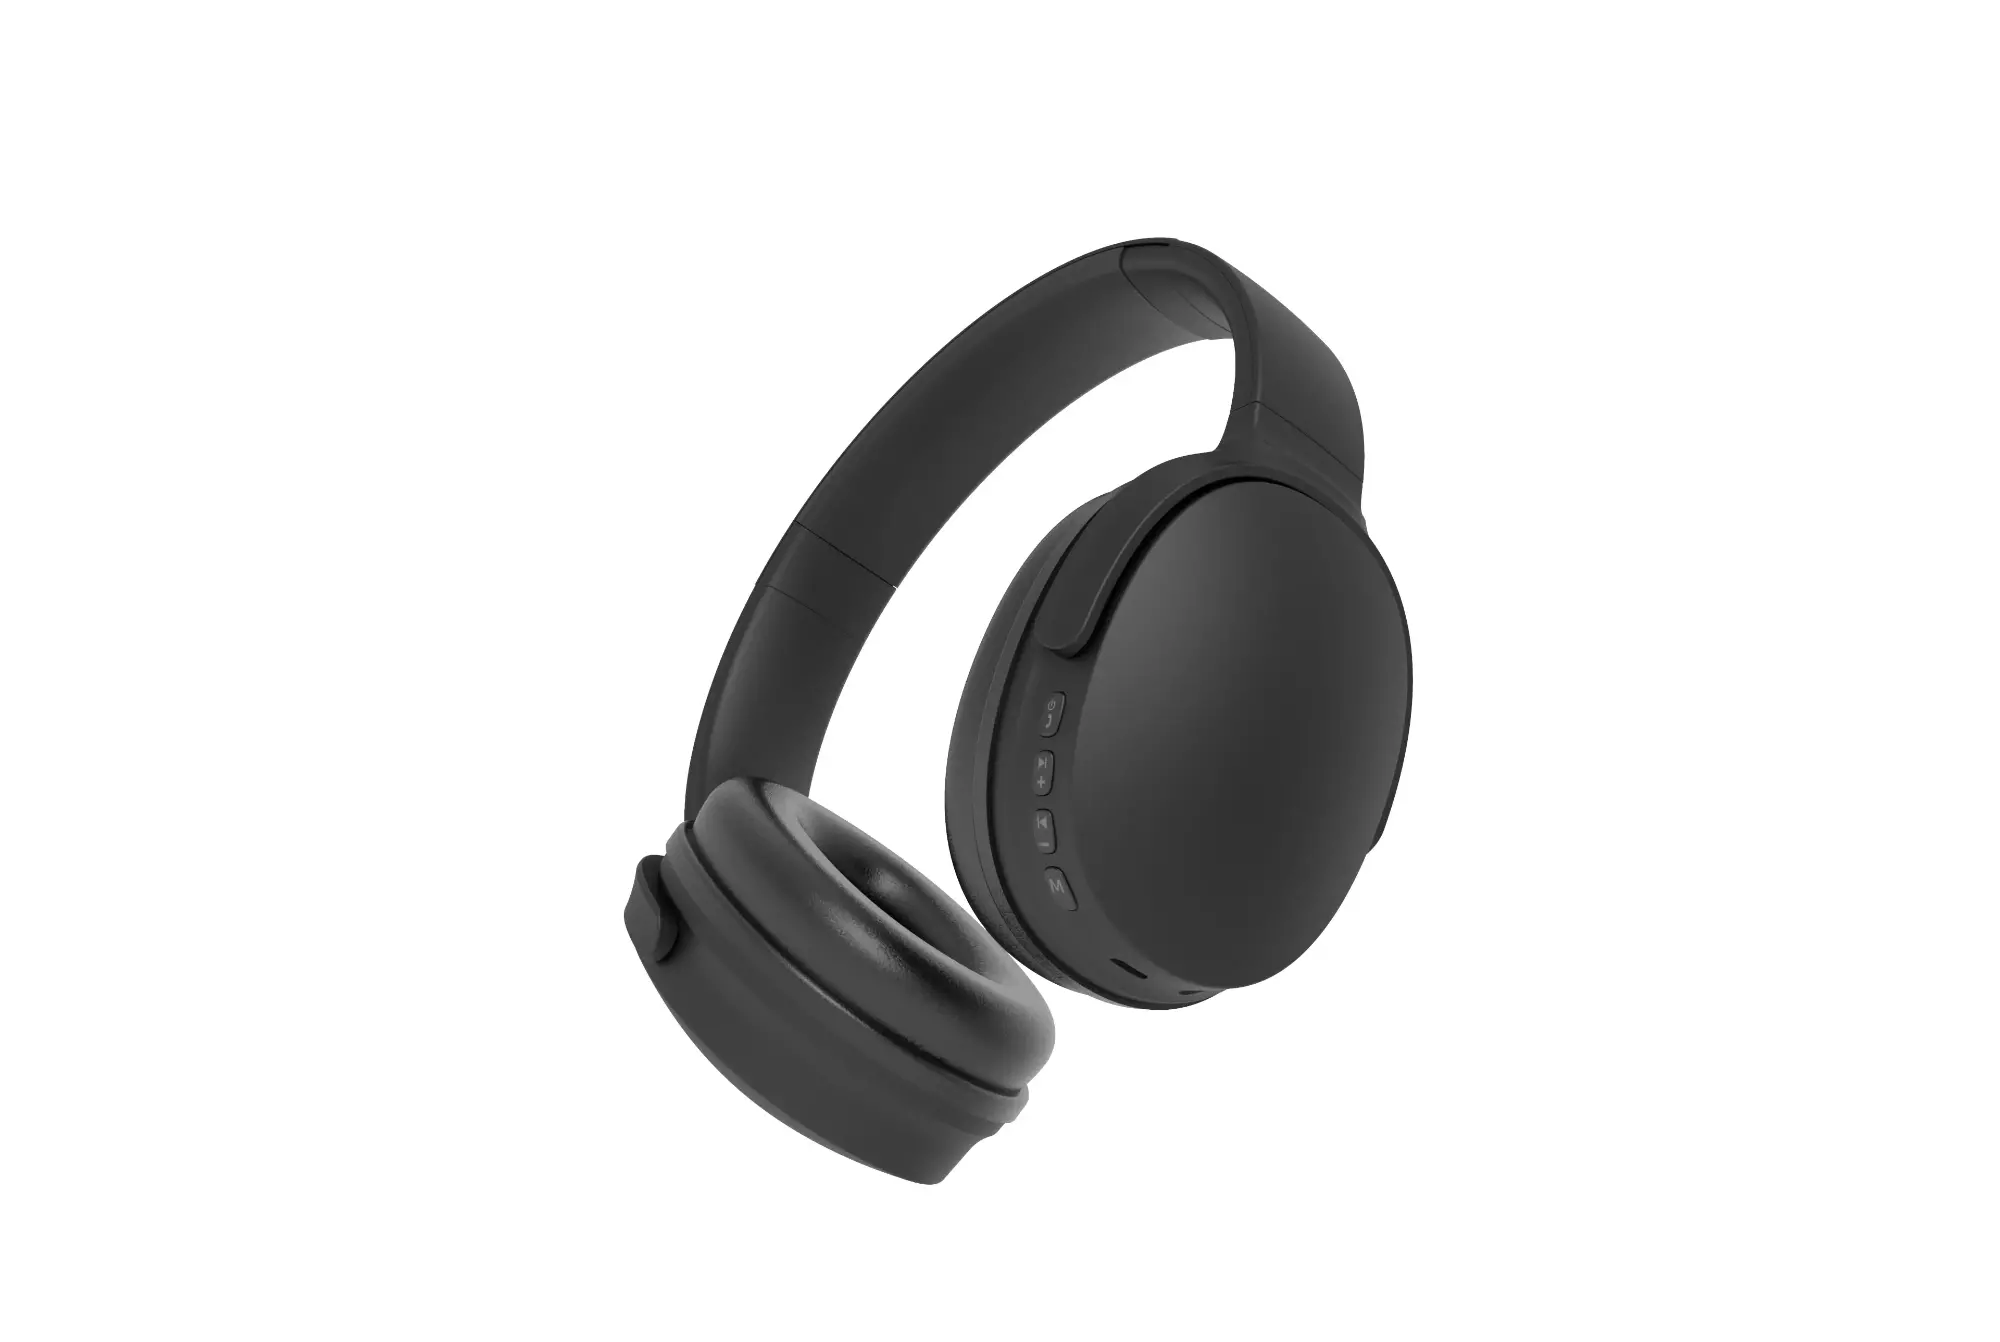 Sonun BL15 Bluetooth headphone